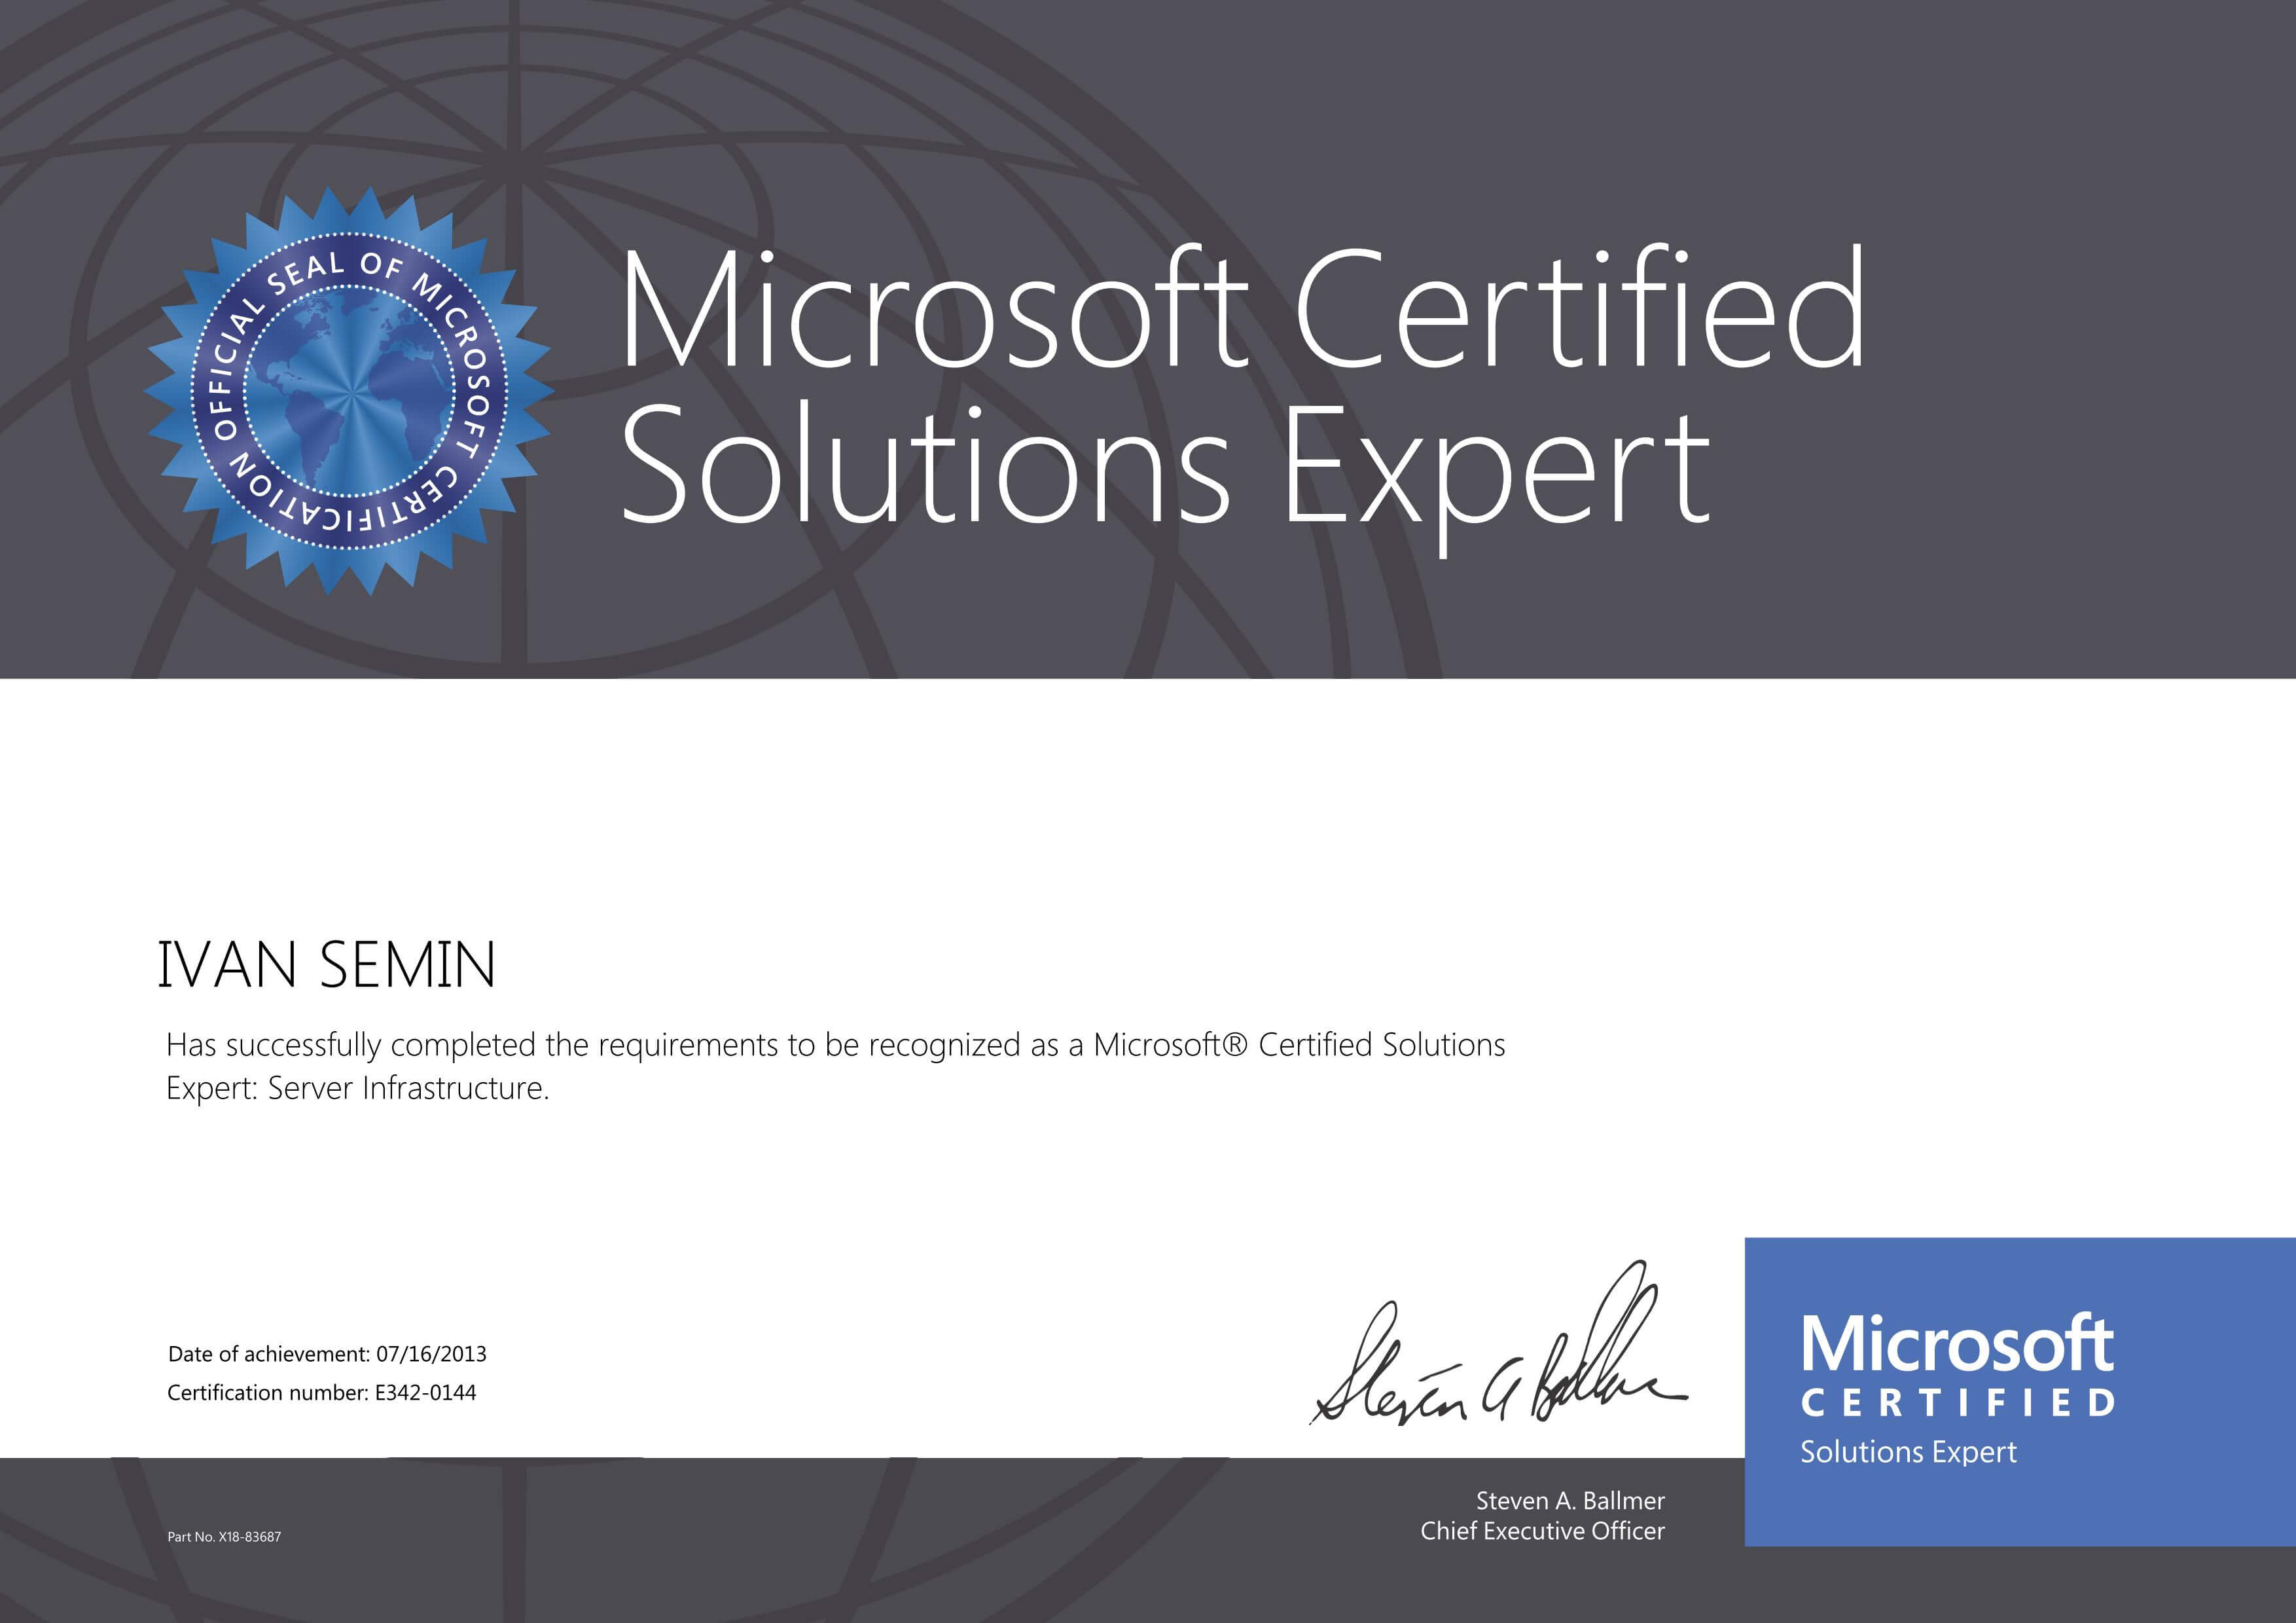 Сертификаты microsoft msce 70-414 (Microsoft Certified Solutions Expert) #ИванСемин